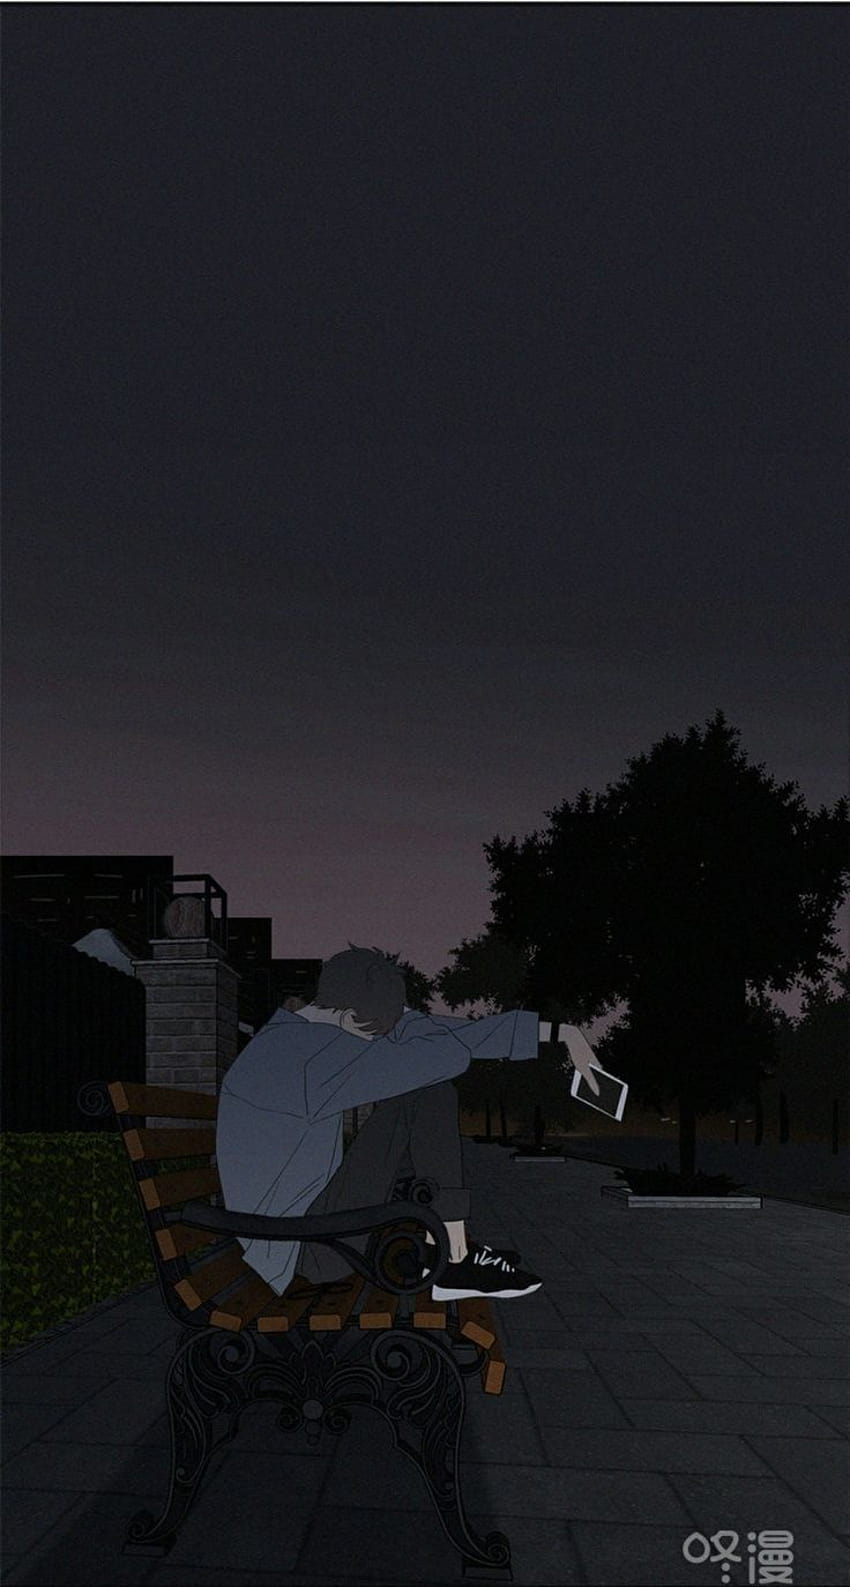 Anime Loner Girl by LONEWOLF649 on DeviantArt